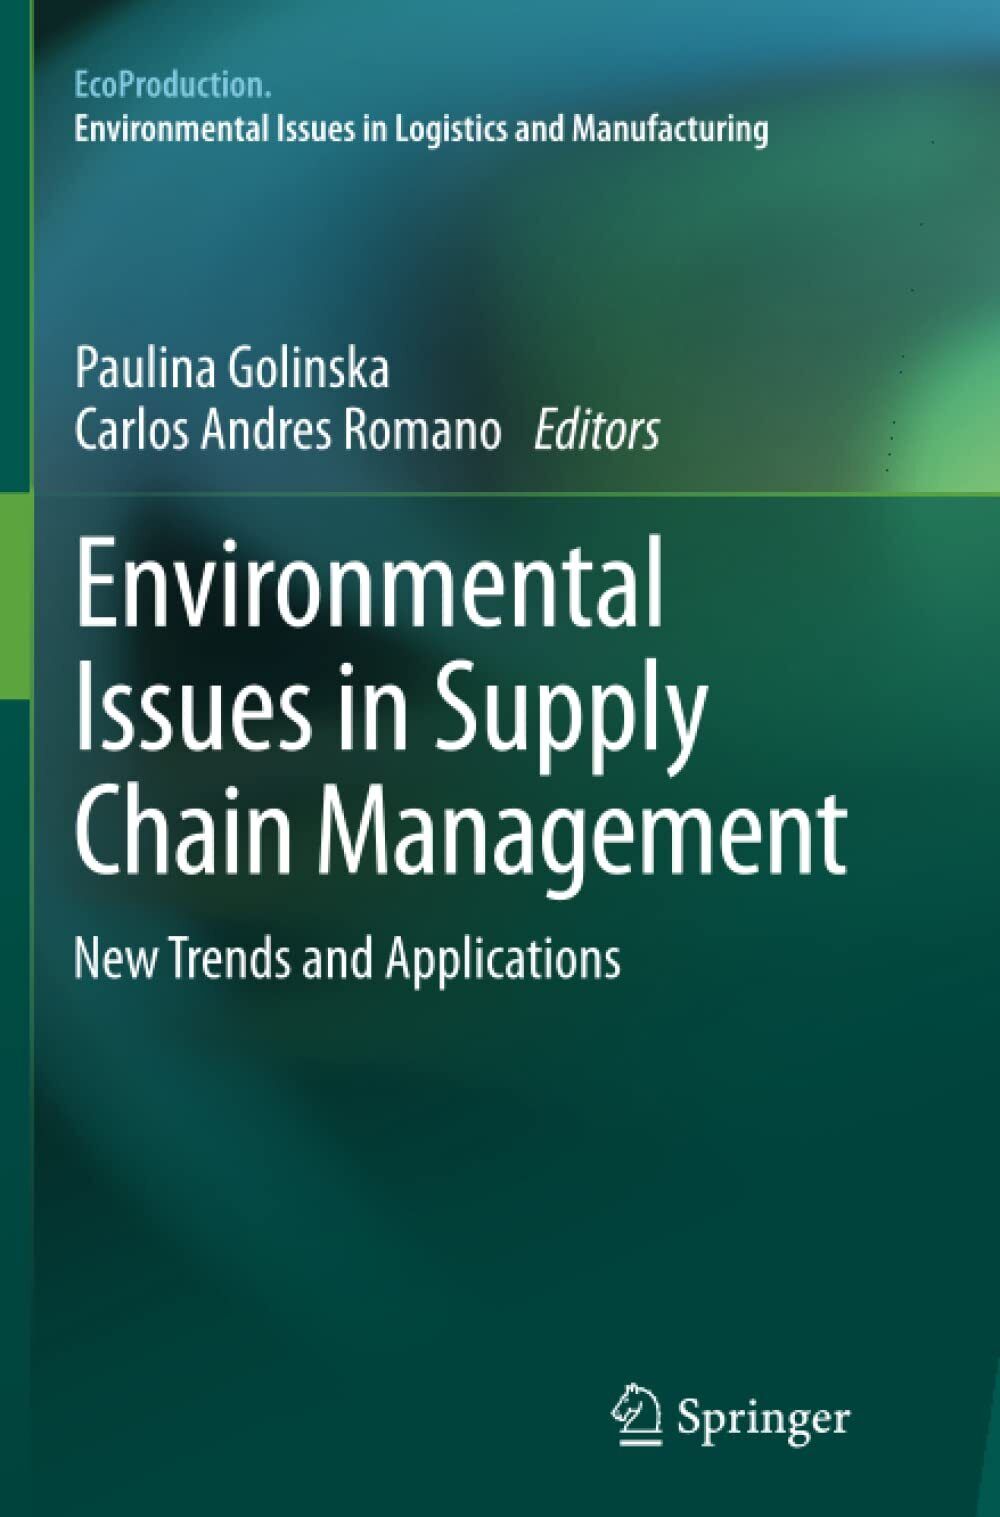 Environmental Issues in Supply Chain Management - Paulina Golinska-Springer,2014 libro usato